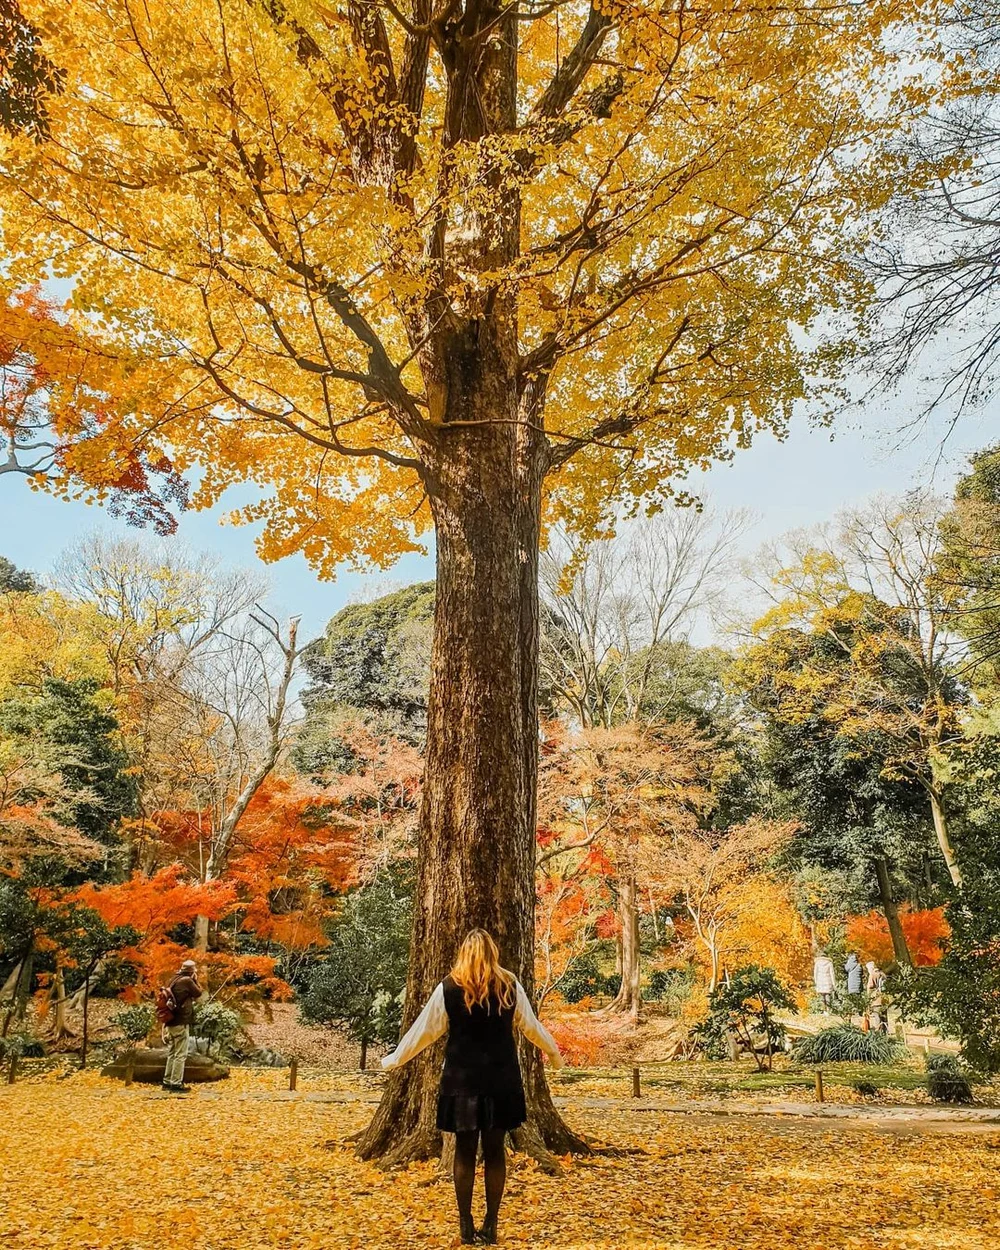 Autumn Foliage in Japan 2022